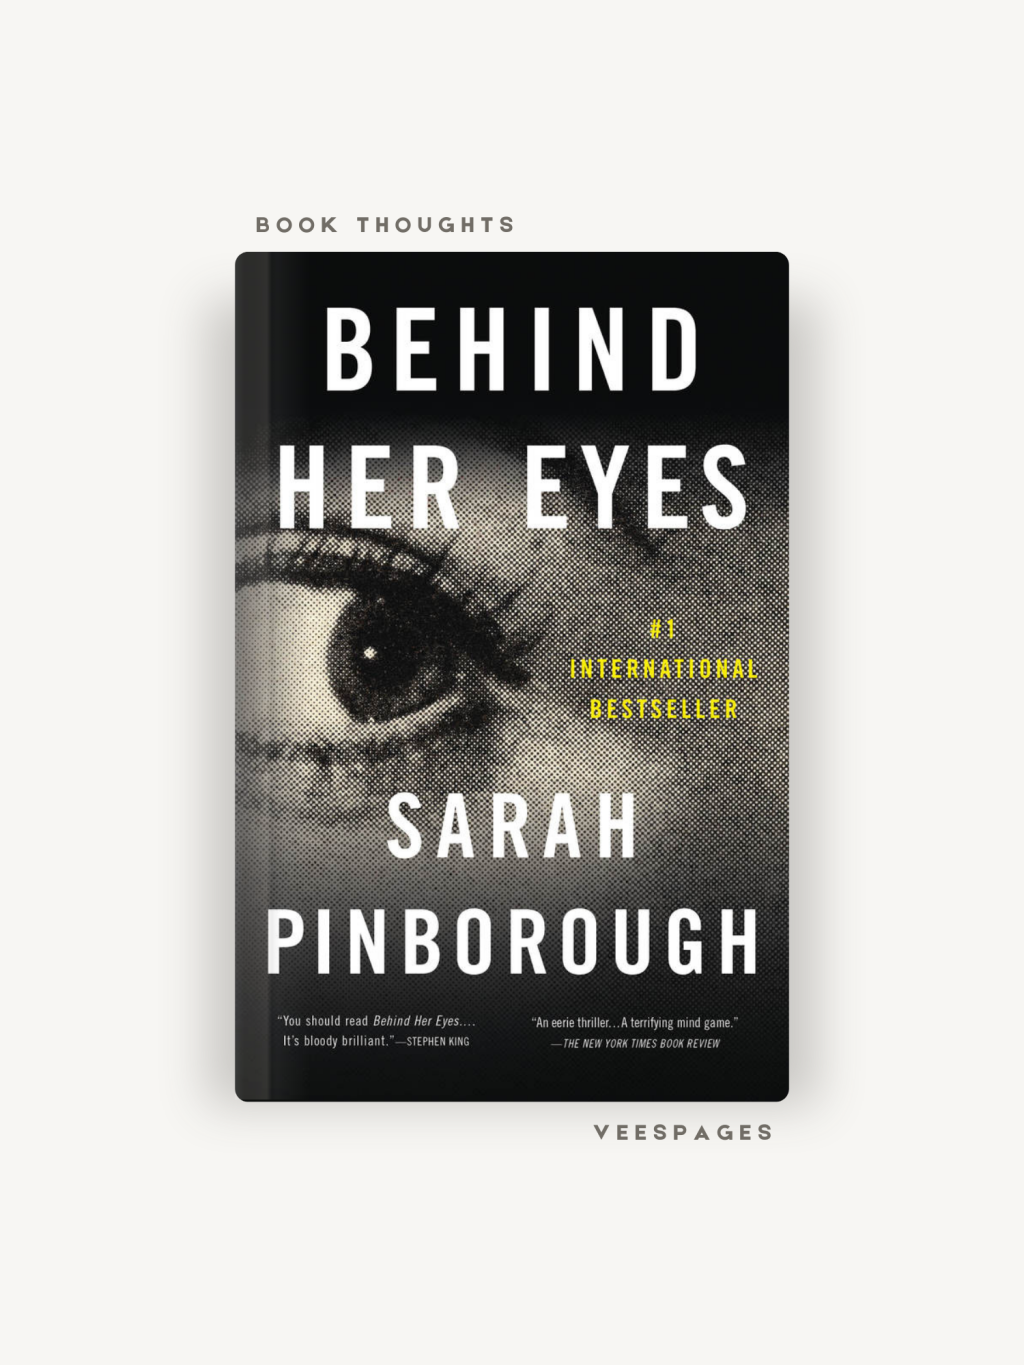 Behind Her Eyes by Sarah Pinborough ⏤ A Beloved Mystery Thriller Read